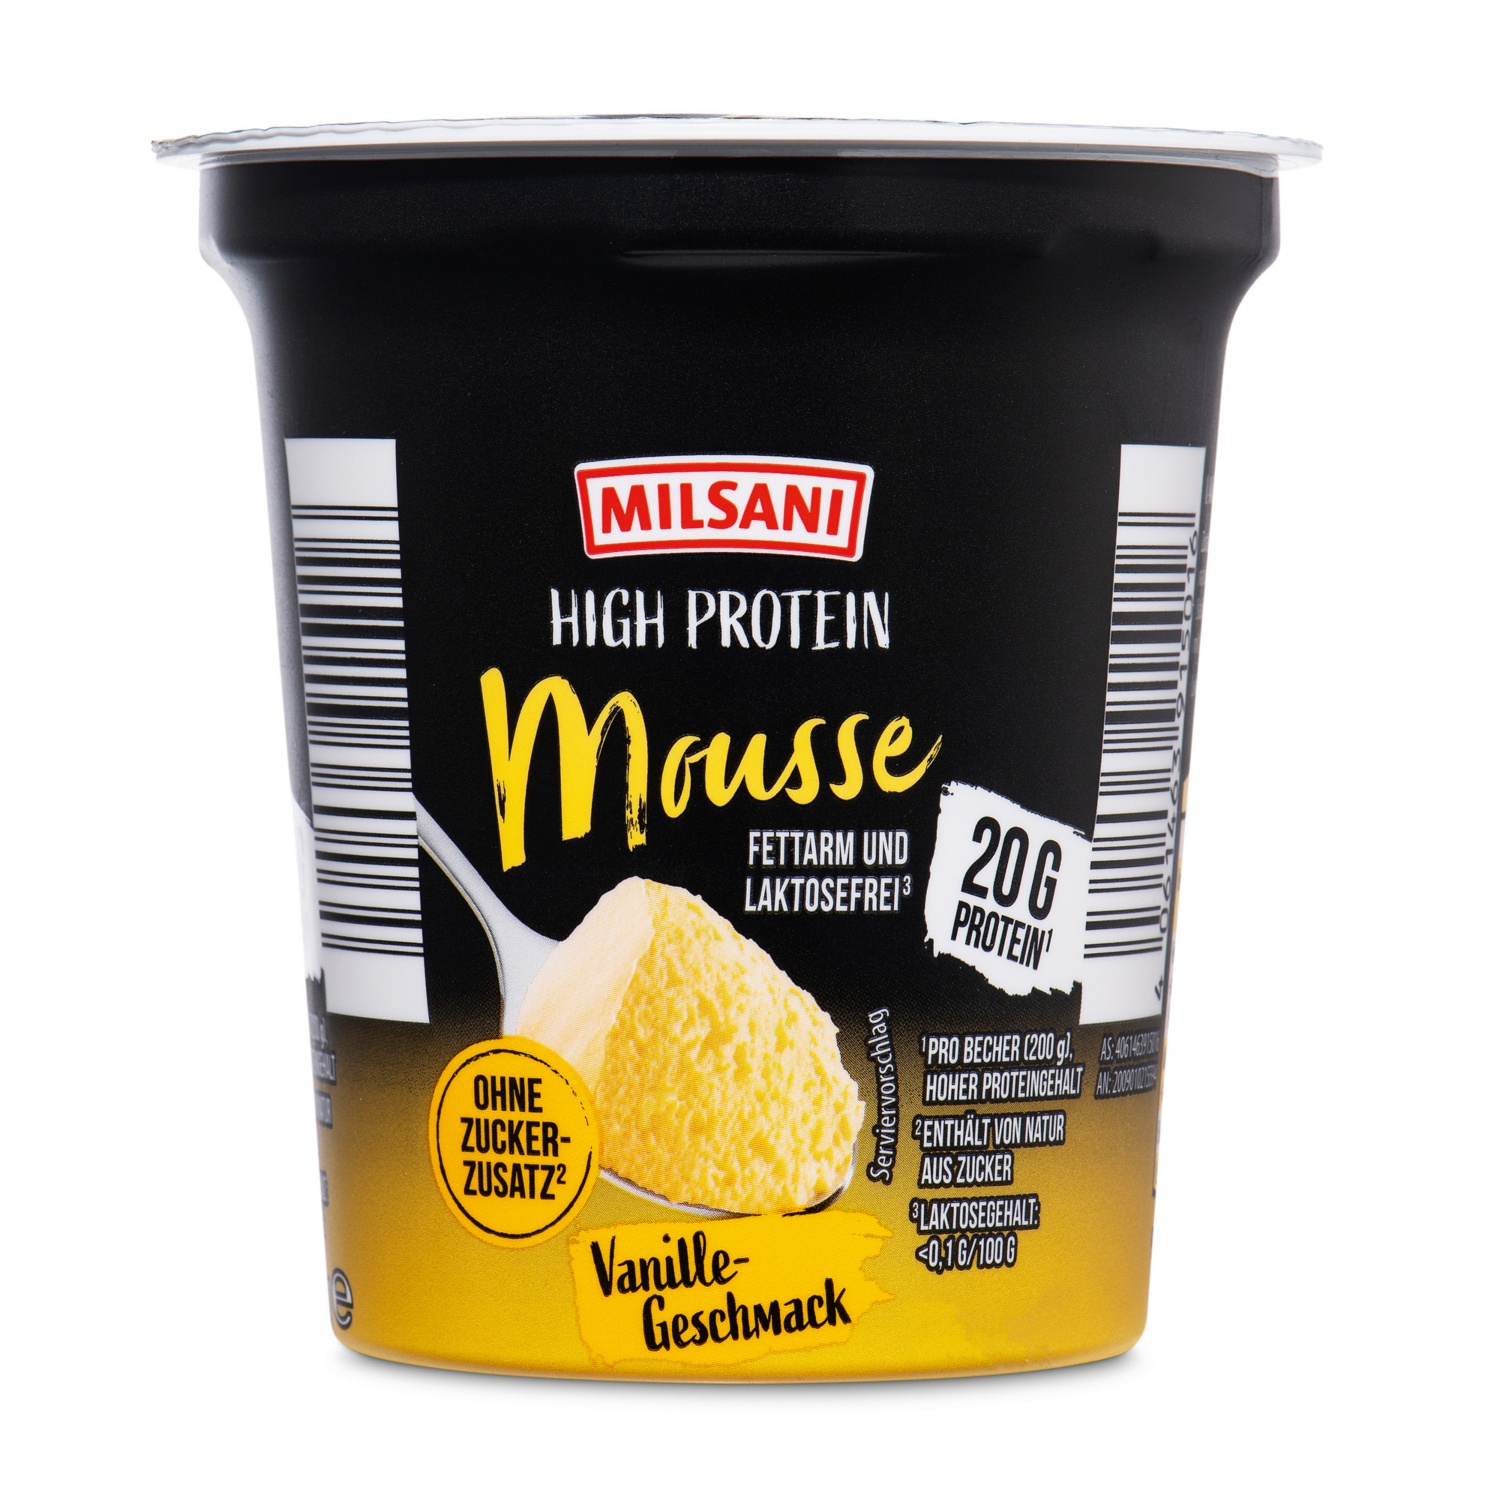 MILSANI High Protein Mousse, Vanille